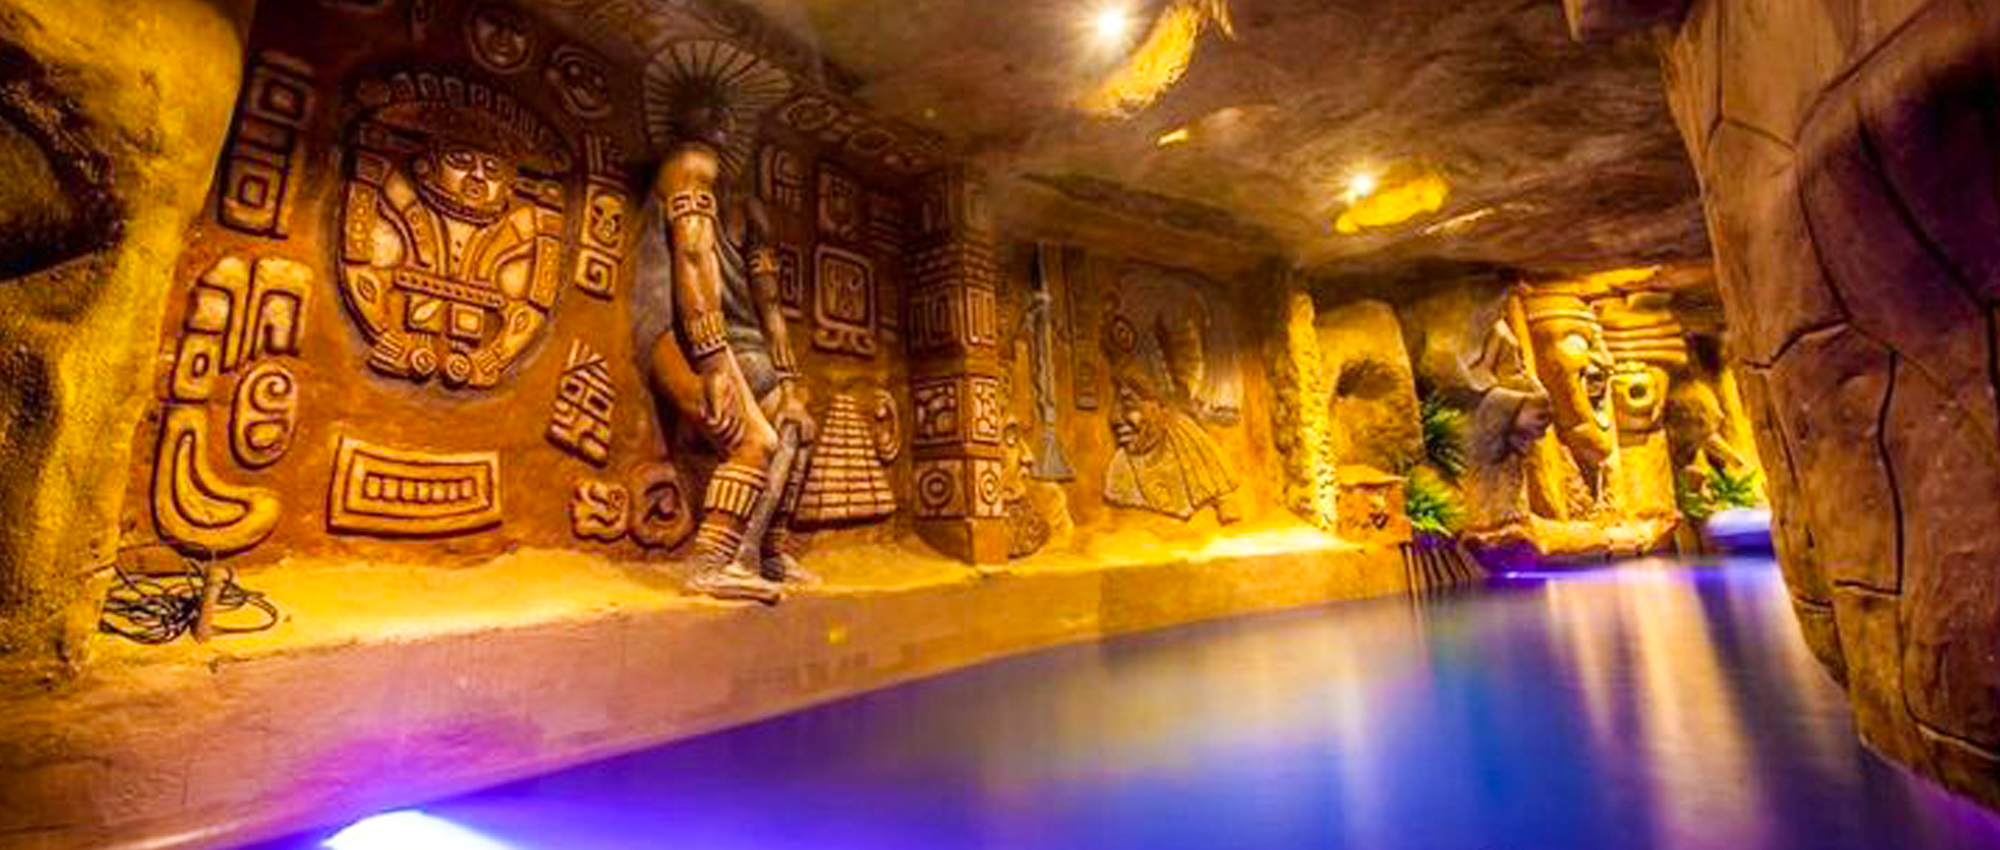 Guruge Mayan Water Park – Srilankas No1 Water Park